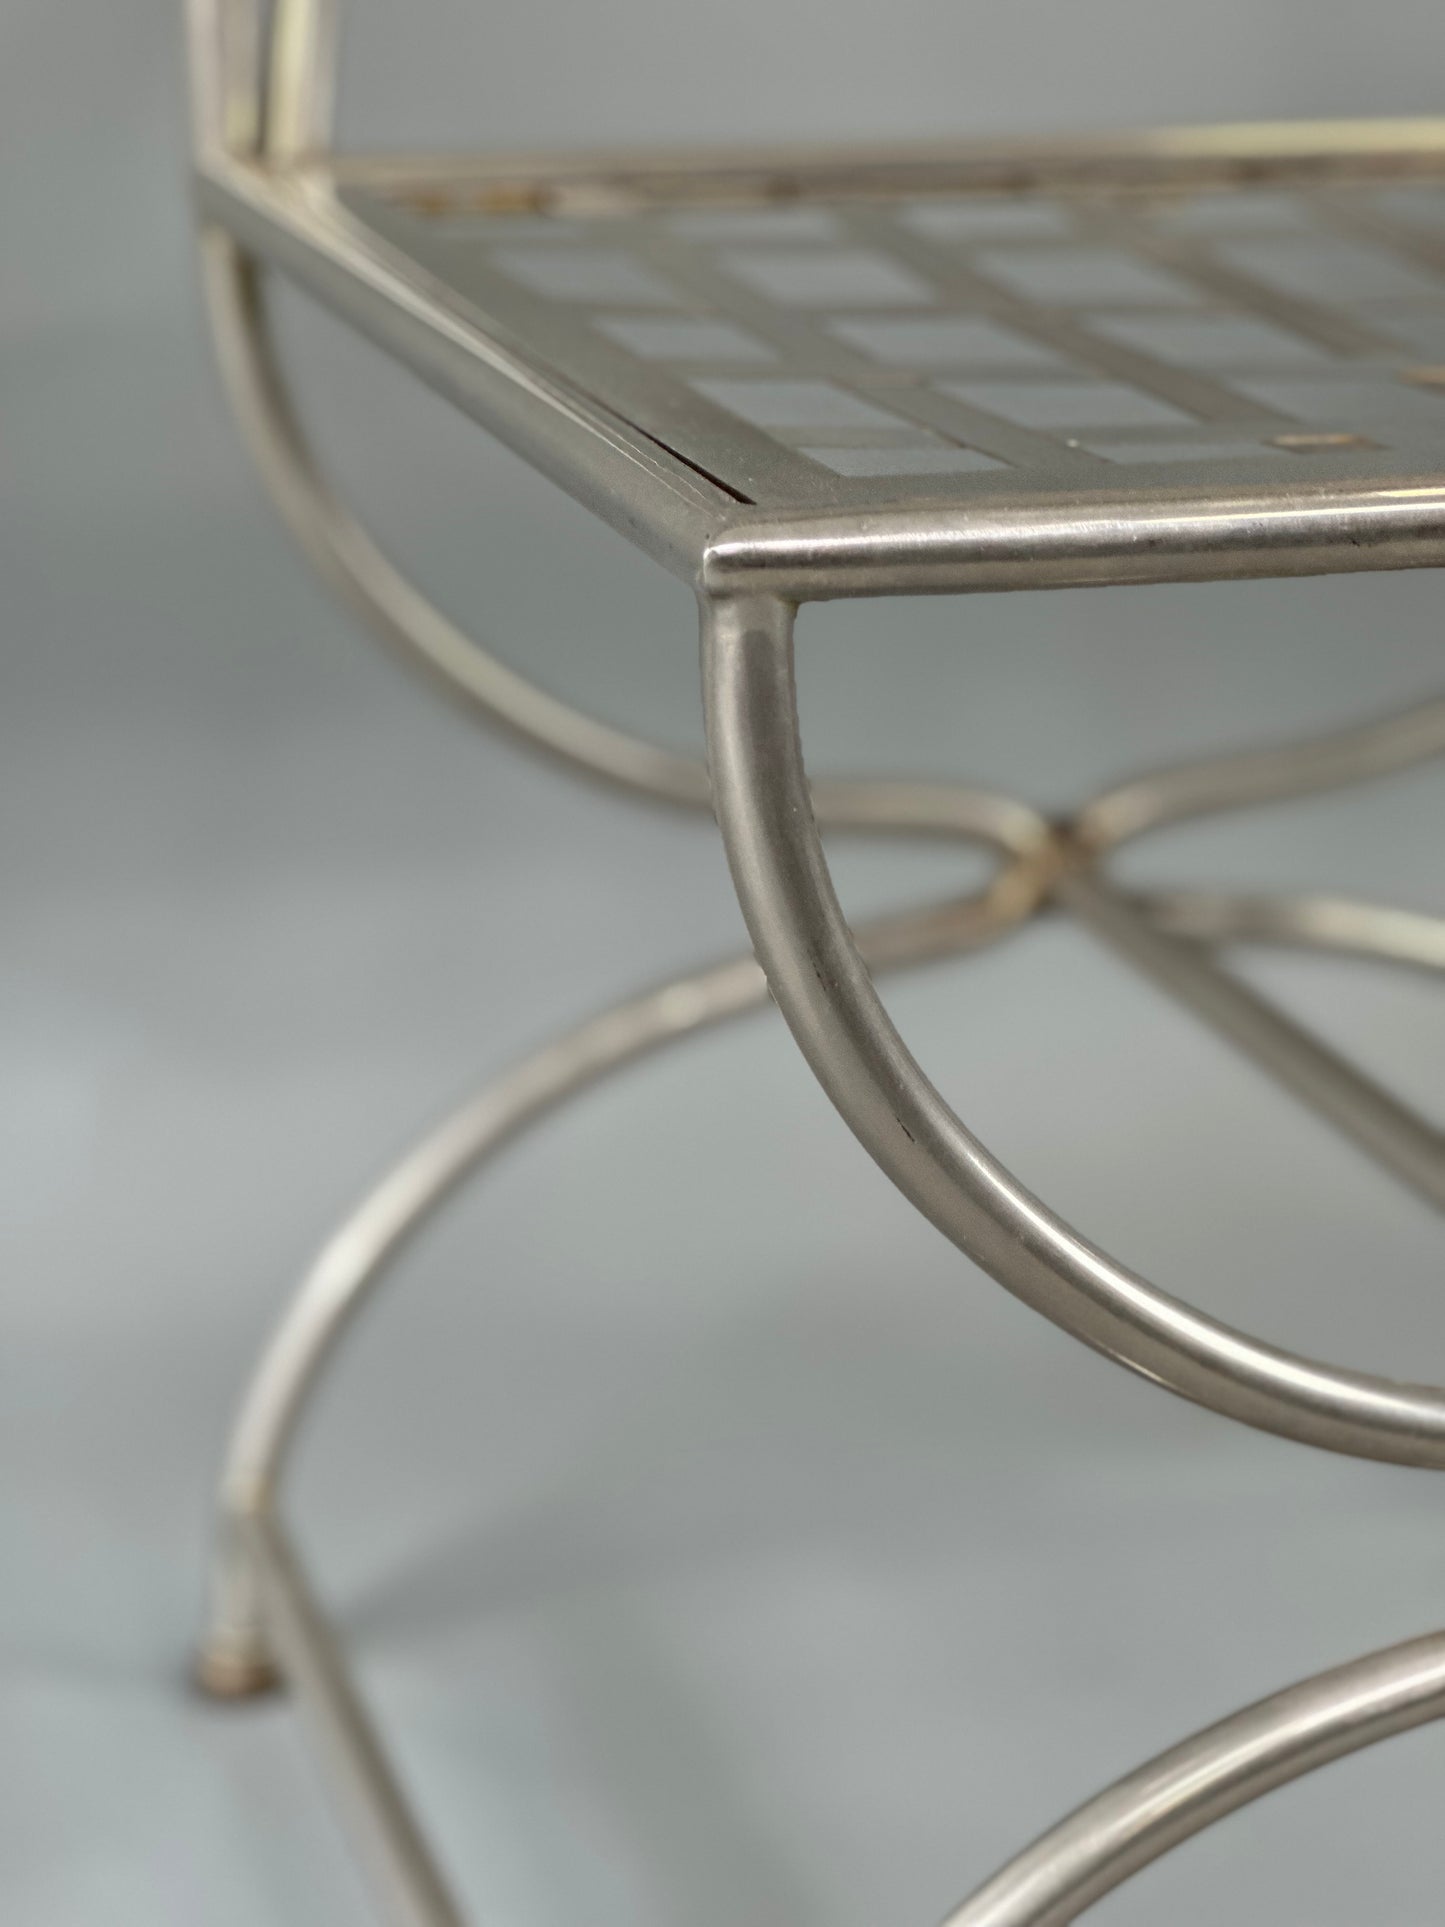 Midcentury Jansen Metal Chairs - Sold in Pairs